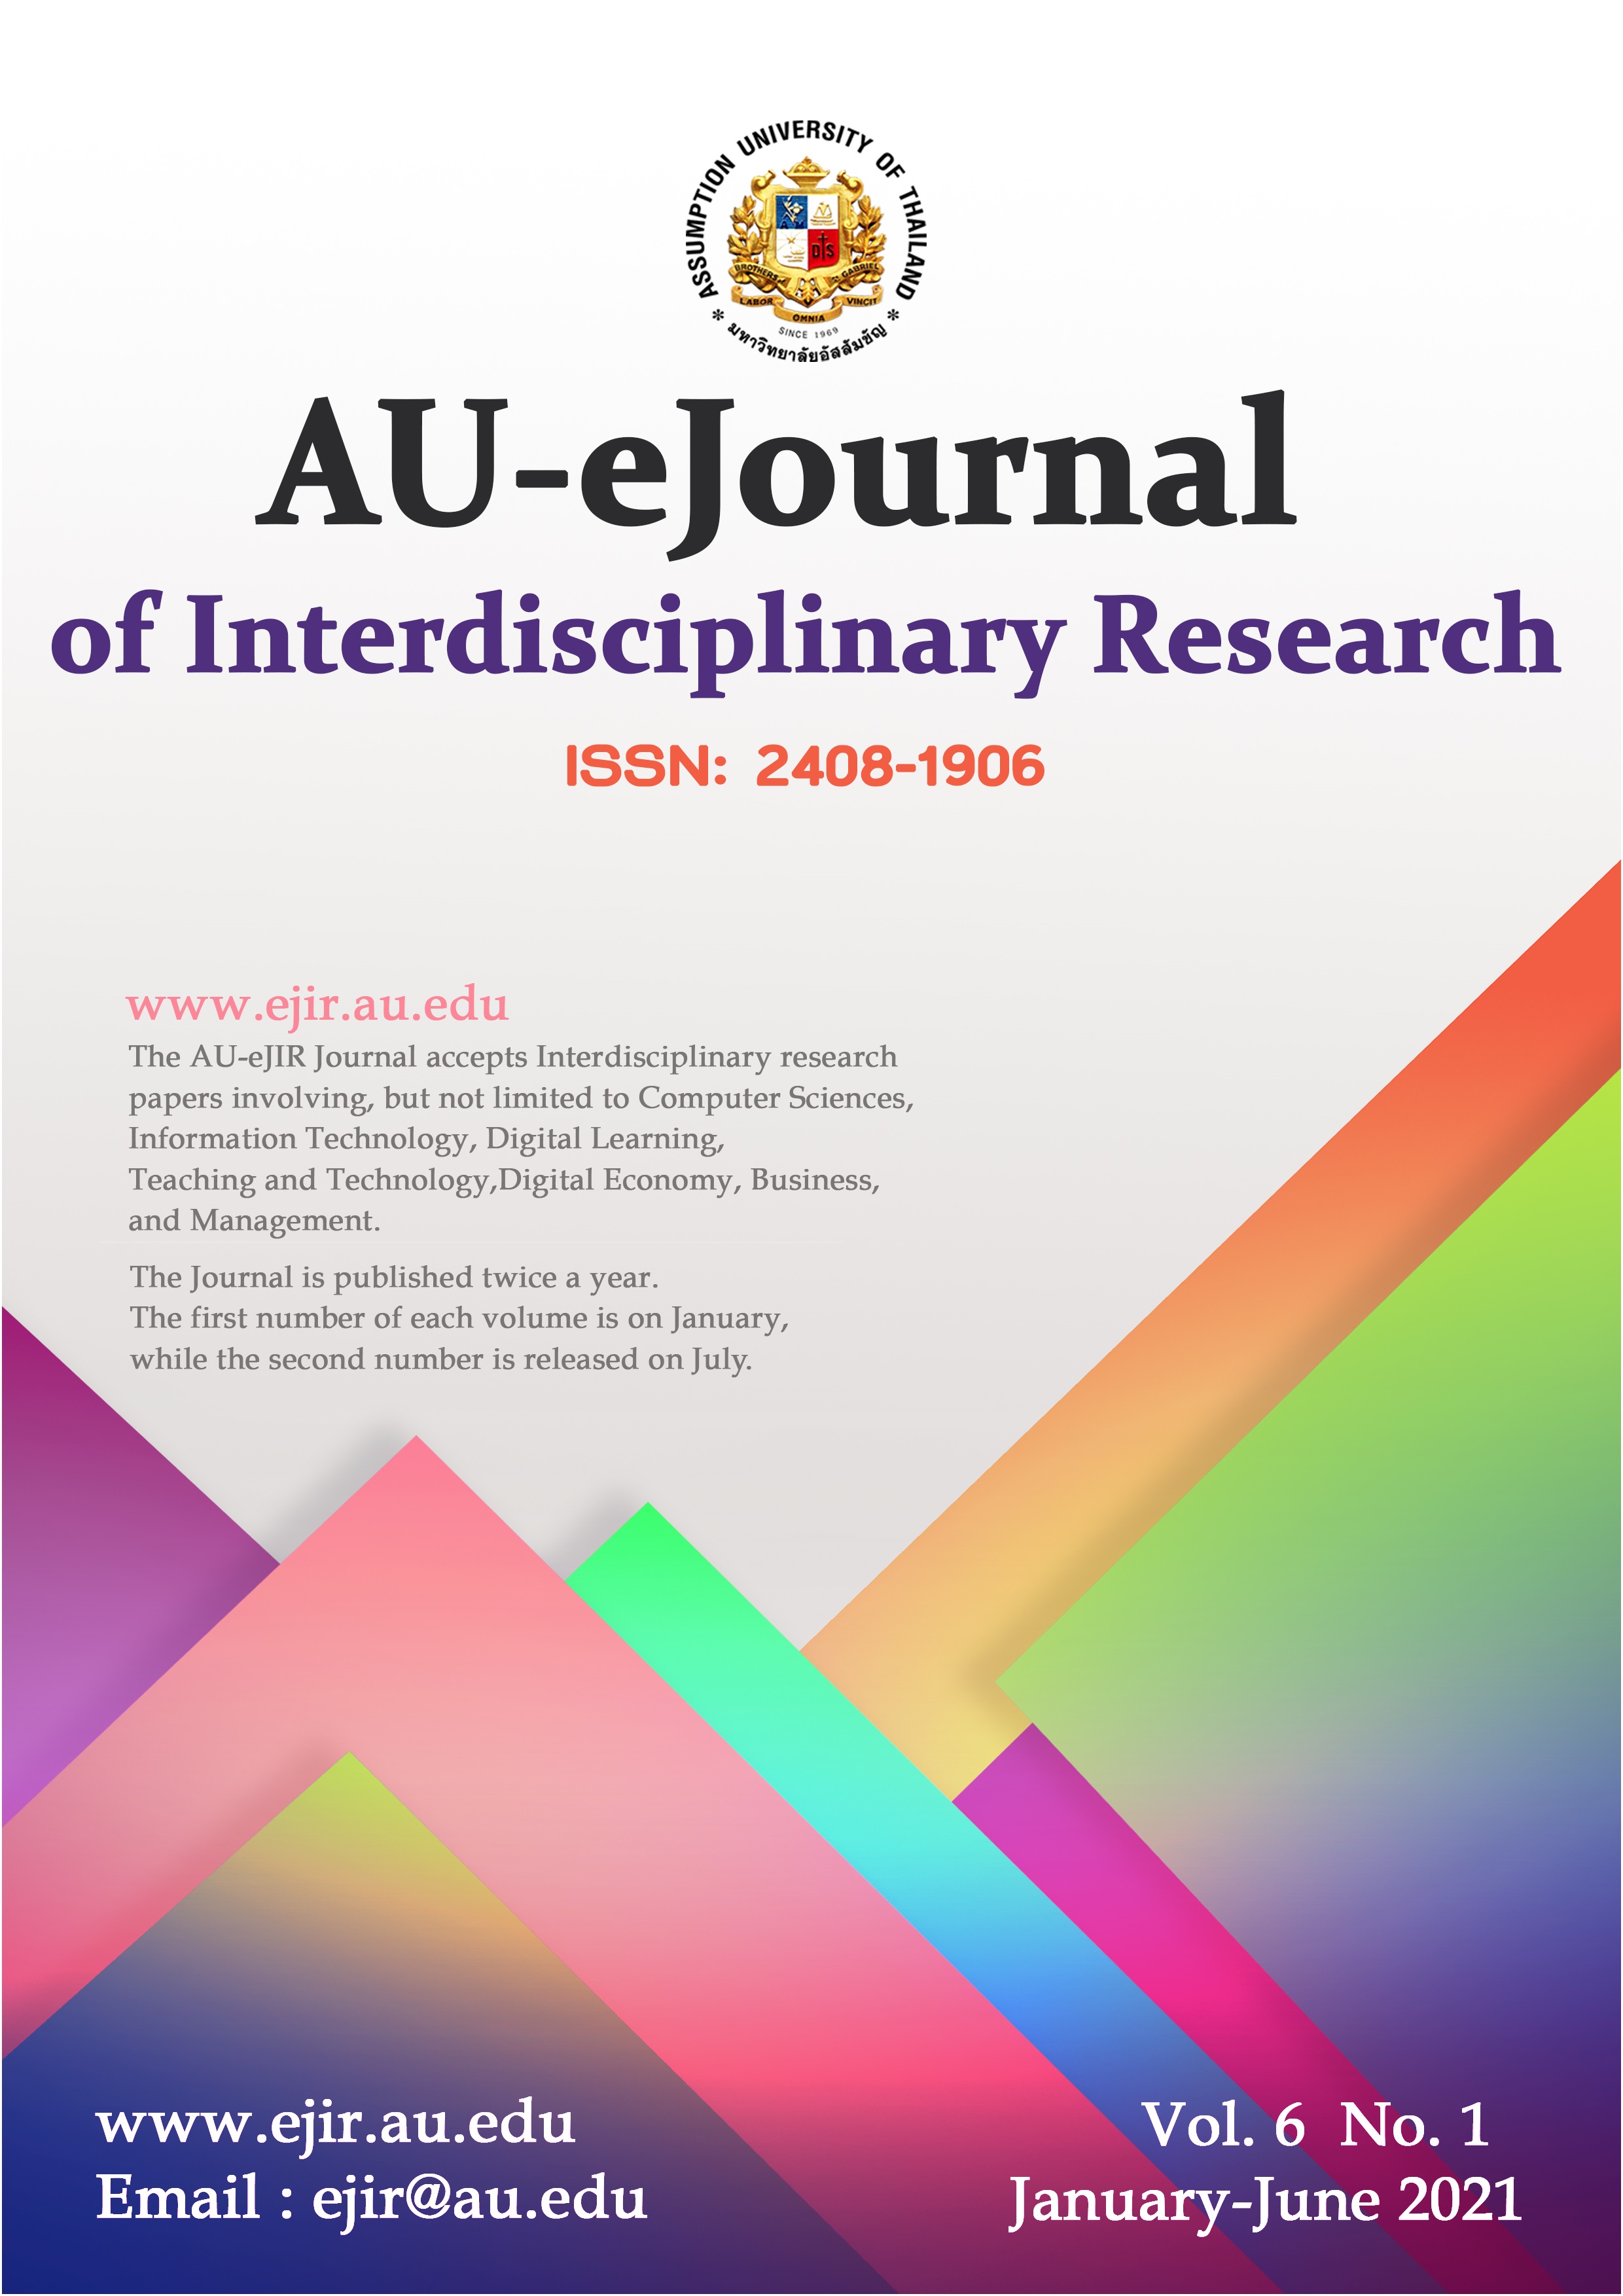 					View Vol. 6 No. 1 (2021): AU-EJOURNAL OF INTERDISCIPLINARY RESEARCH (AU-EJIR 6.1)
				